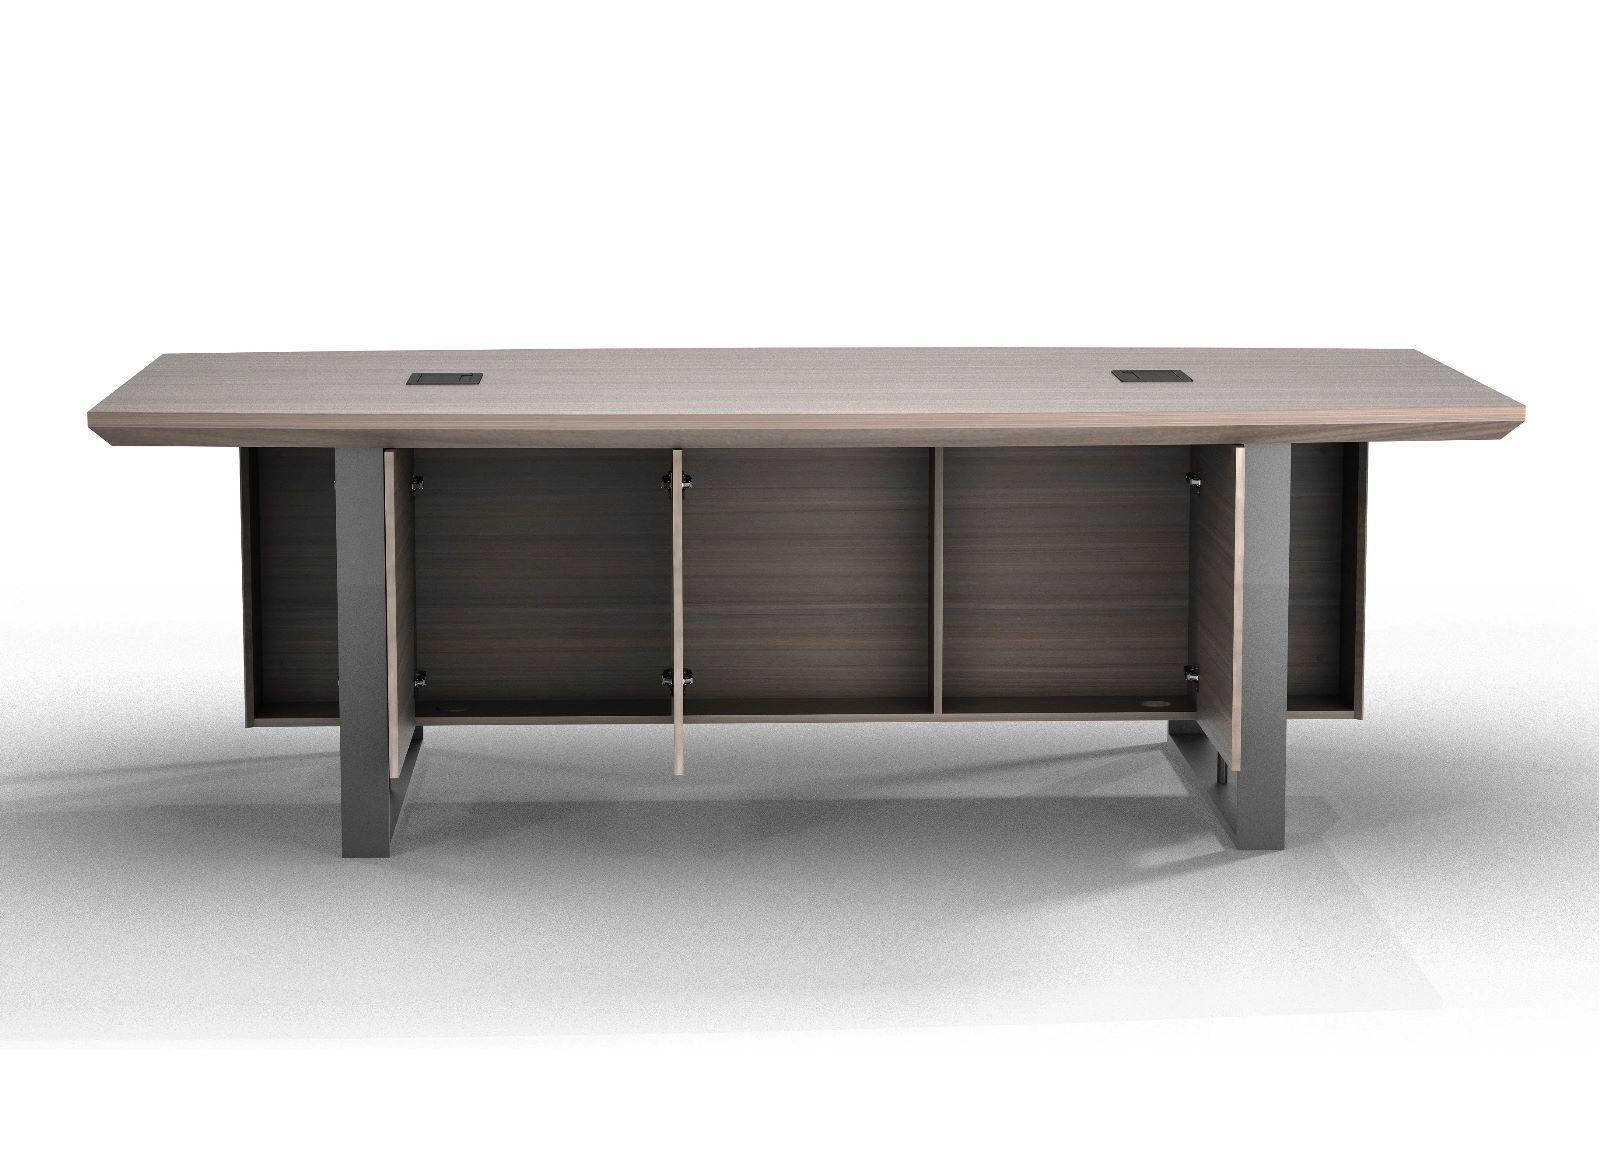 Inigo Boardroom Meeting Table 2.4M - Hazelnut & Black - Furniture Castle